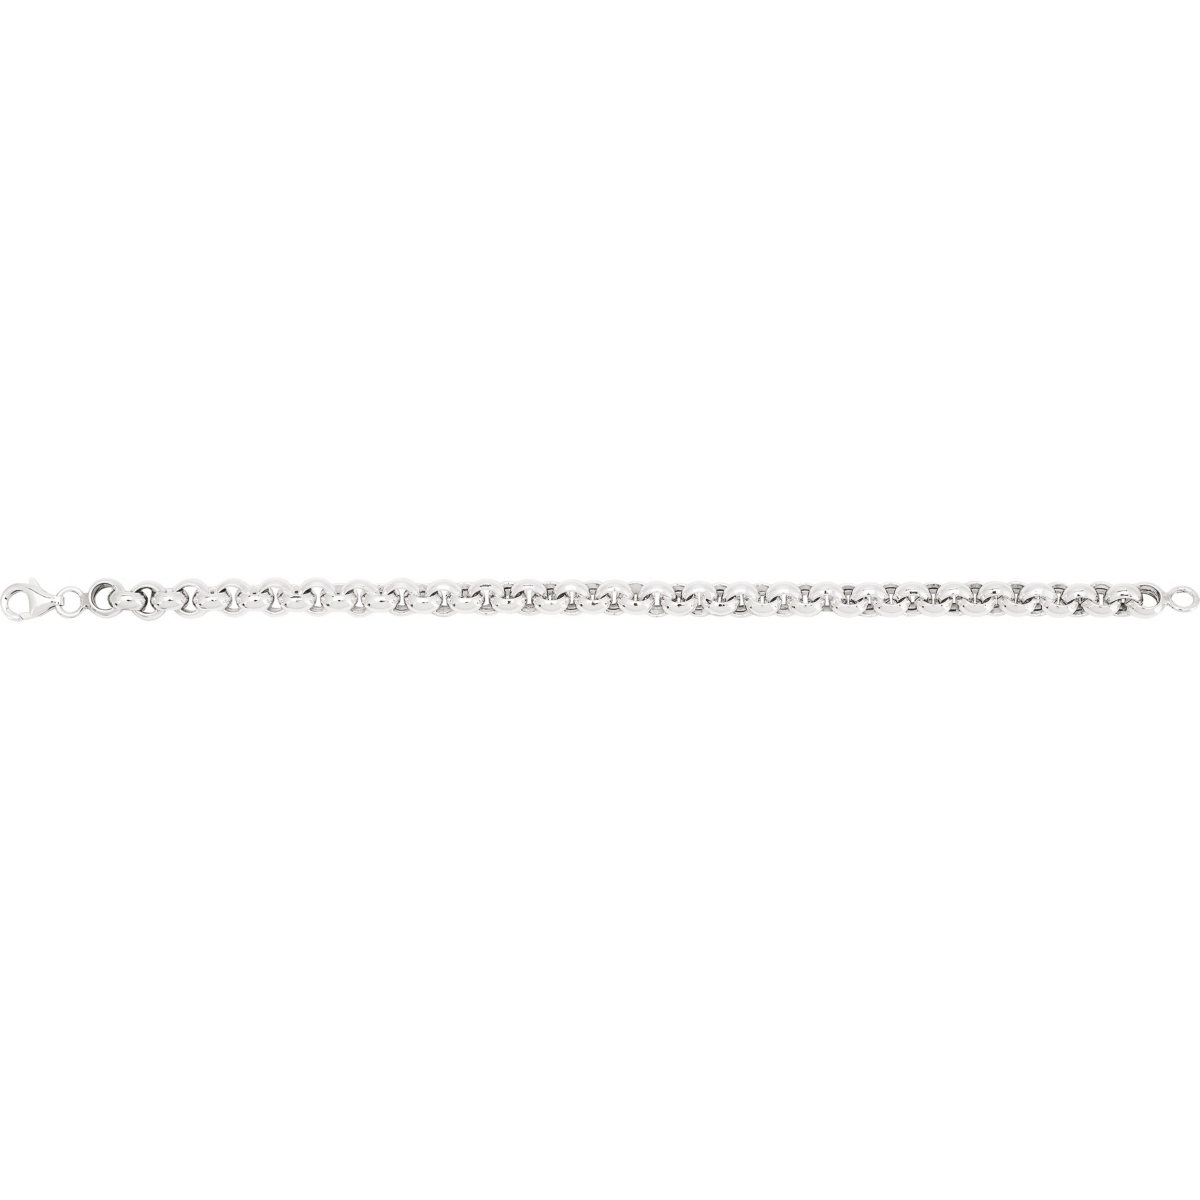 Necklace rh925 Silver Lua Blanca  454412J - Size 50